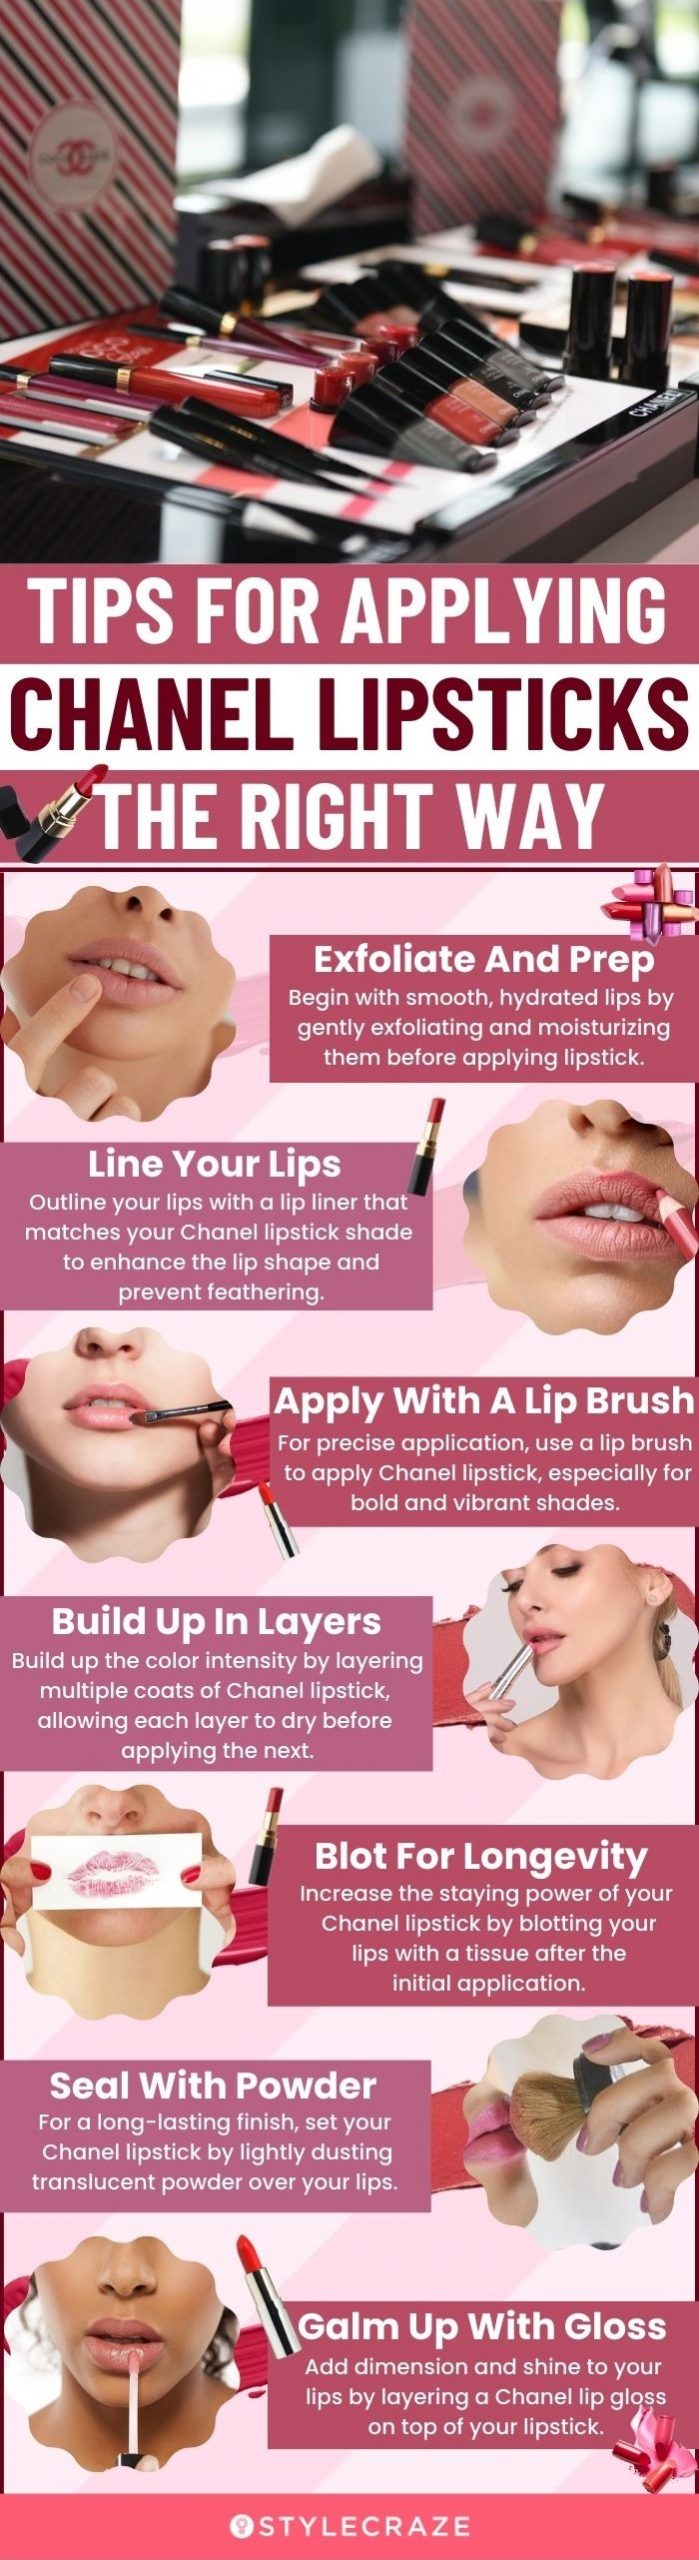 carmen chanel lipstick